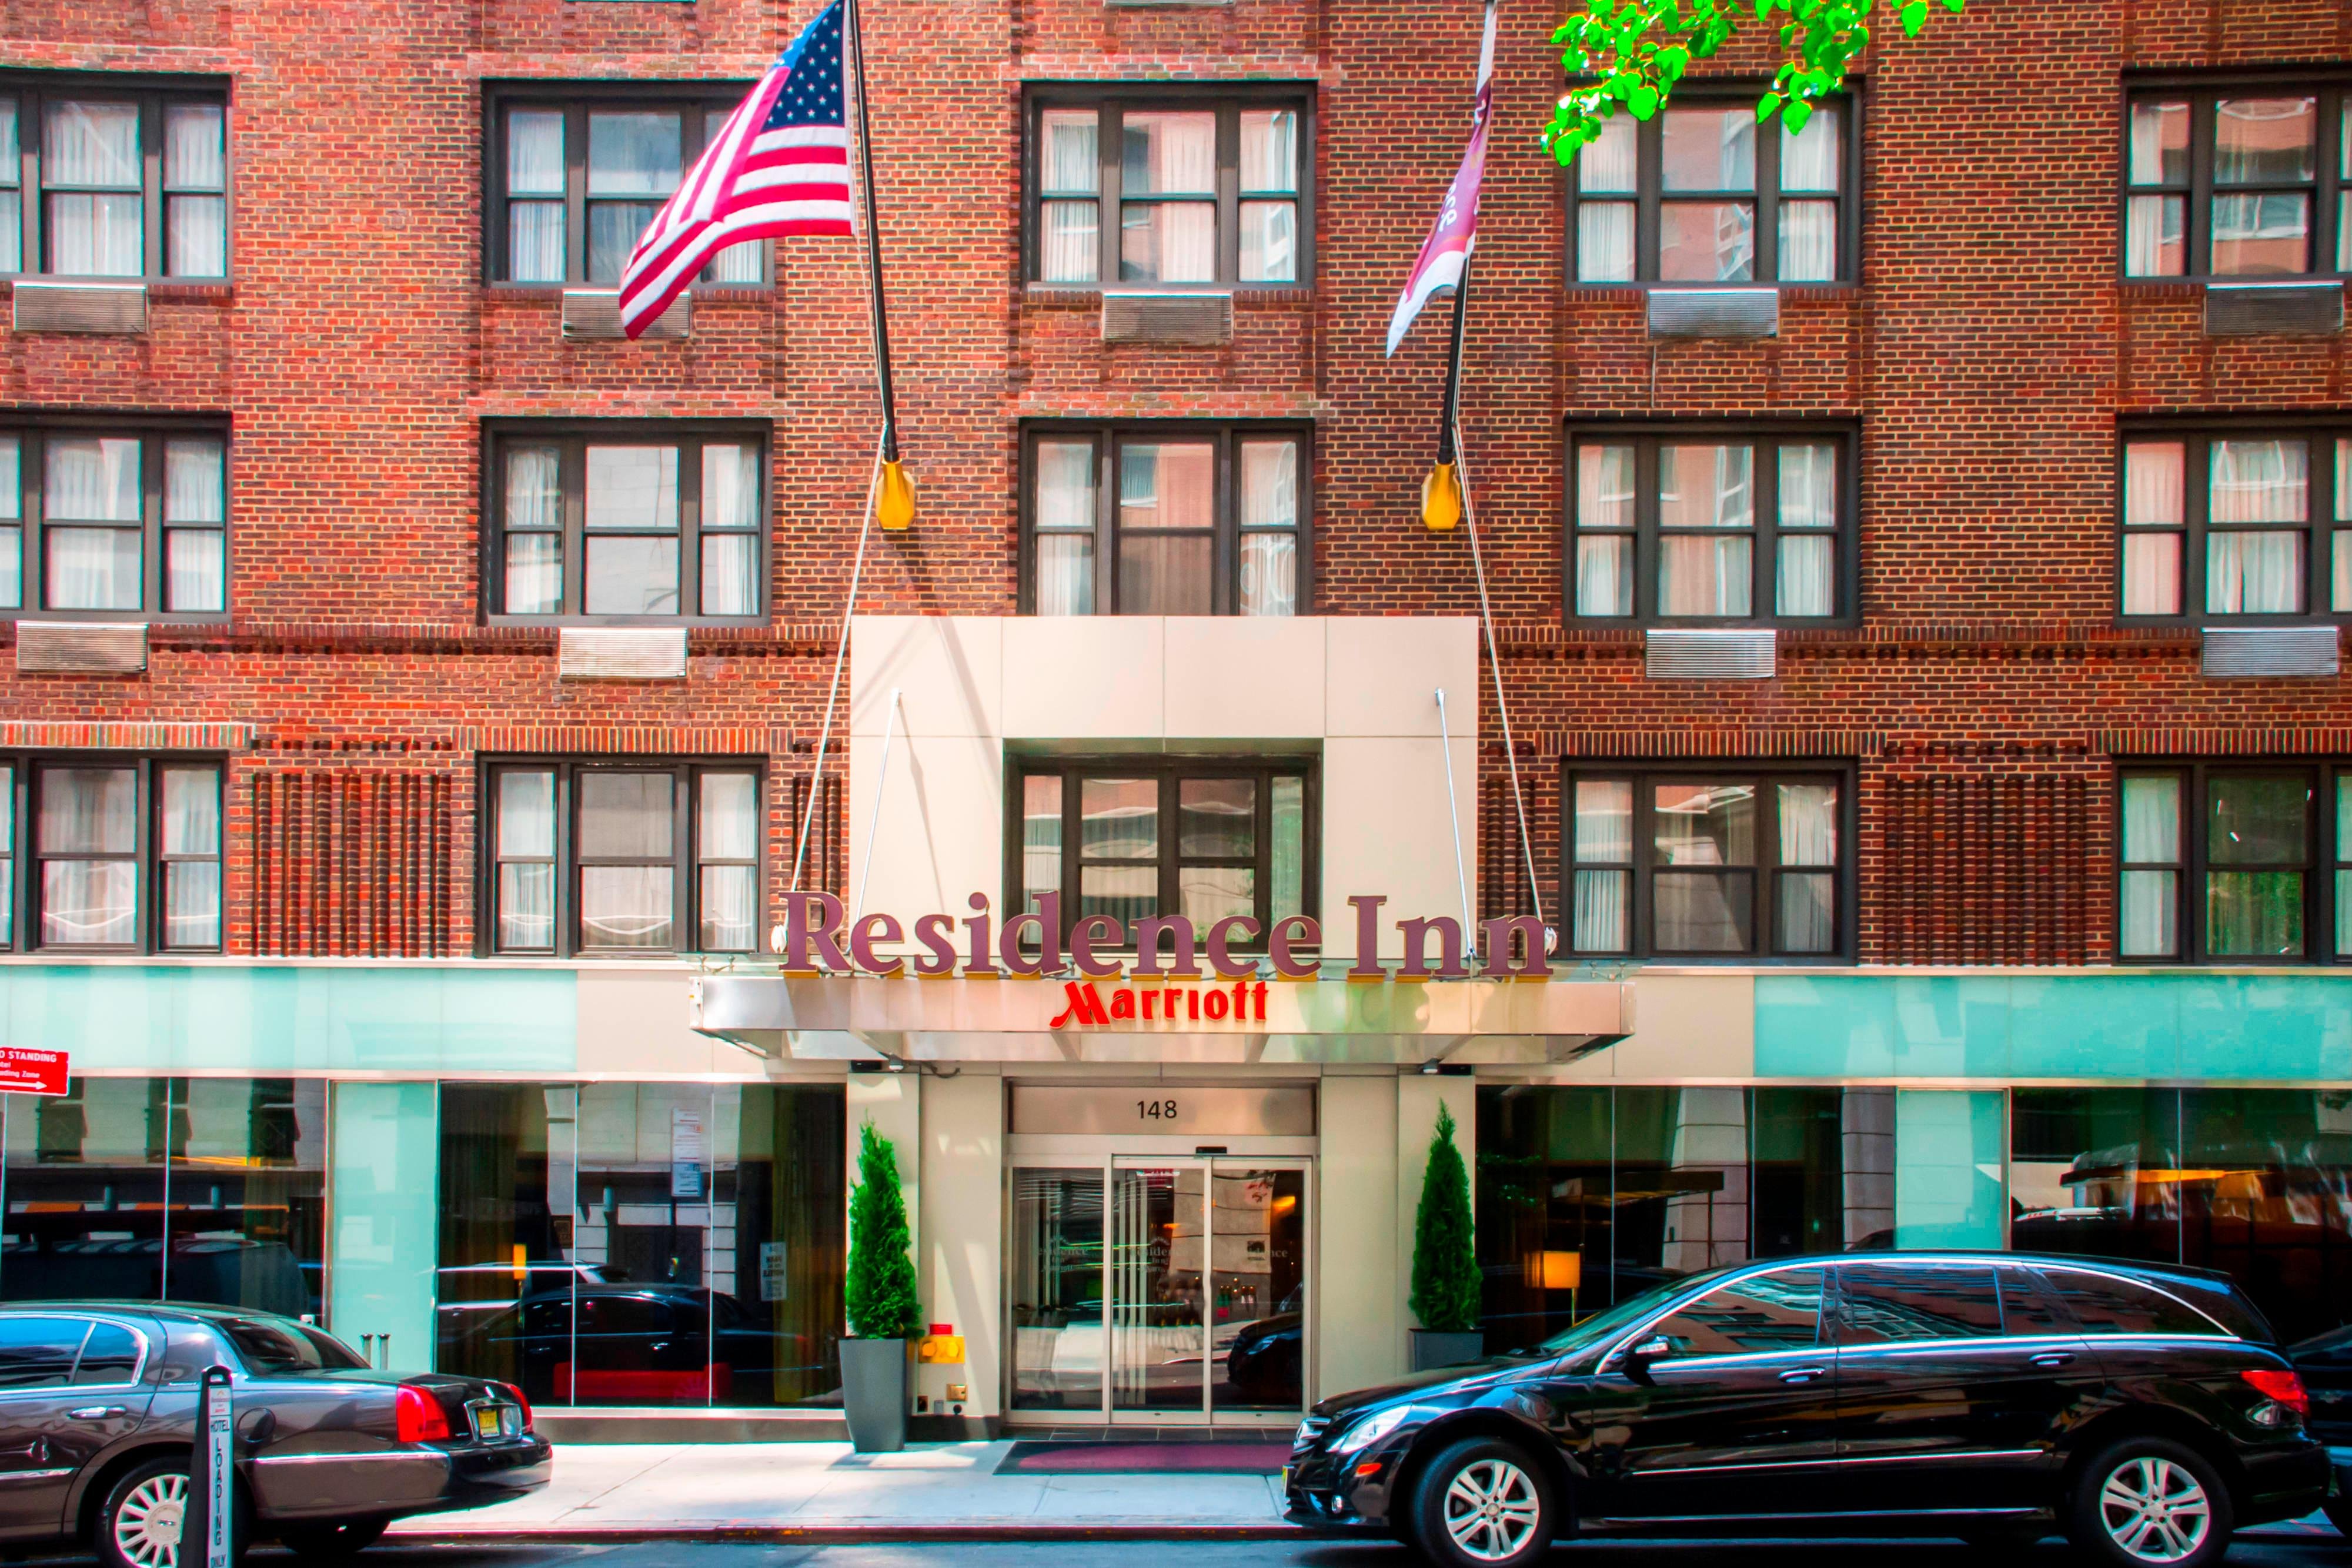 Residence Inn New York Manhattan/Midtown- First Class New York, NY